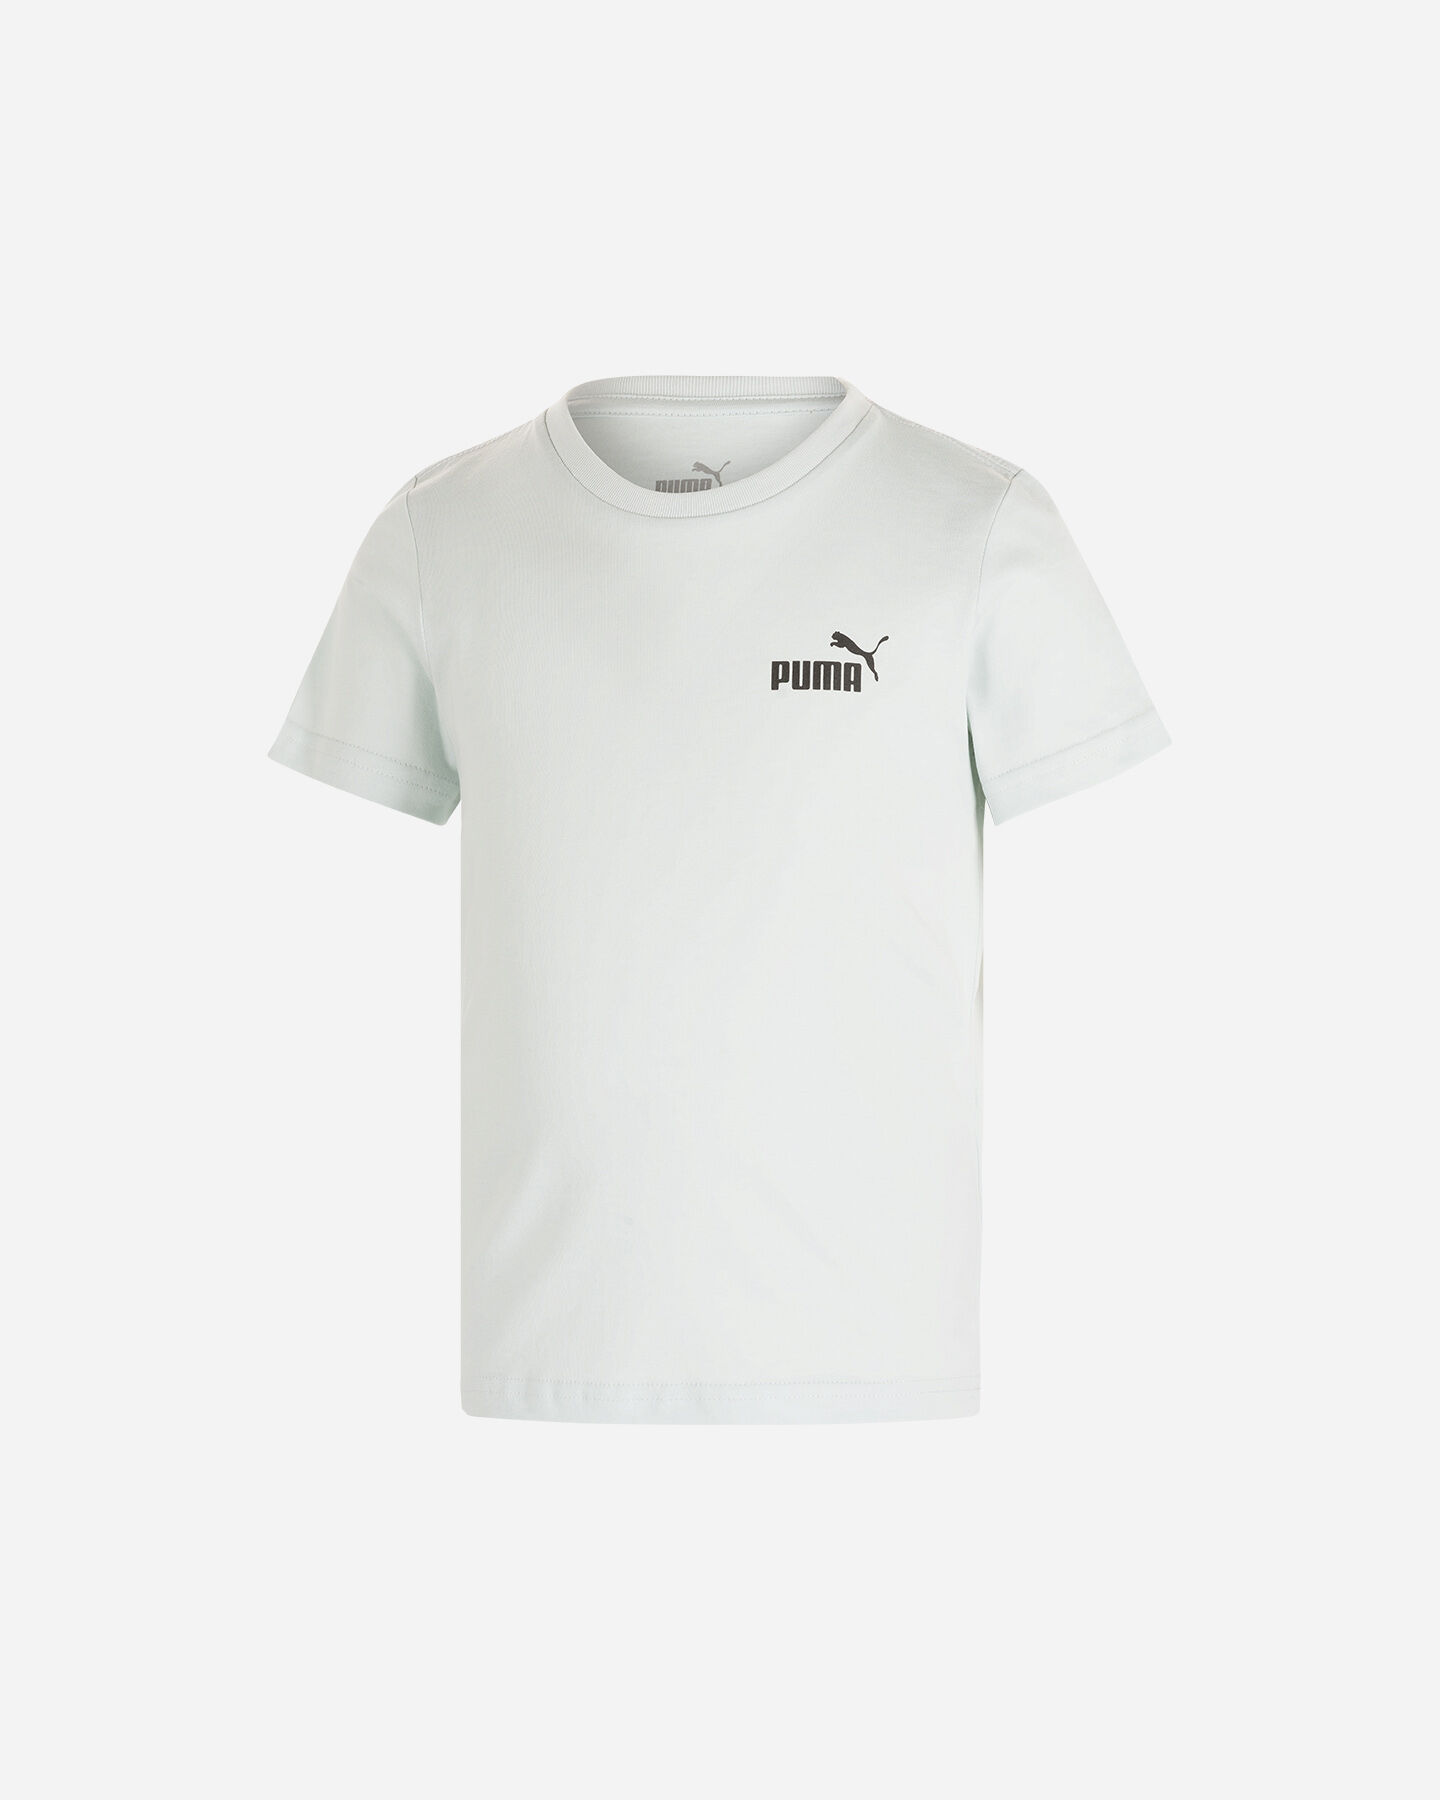  T-Shirt PUMA PALM JR S5503724|01|104 scatto 0